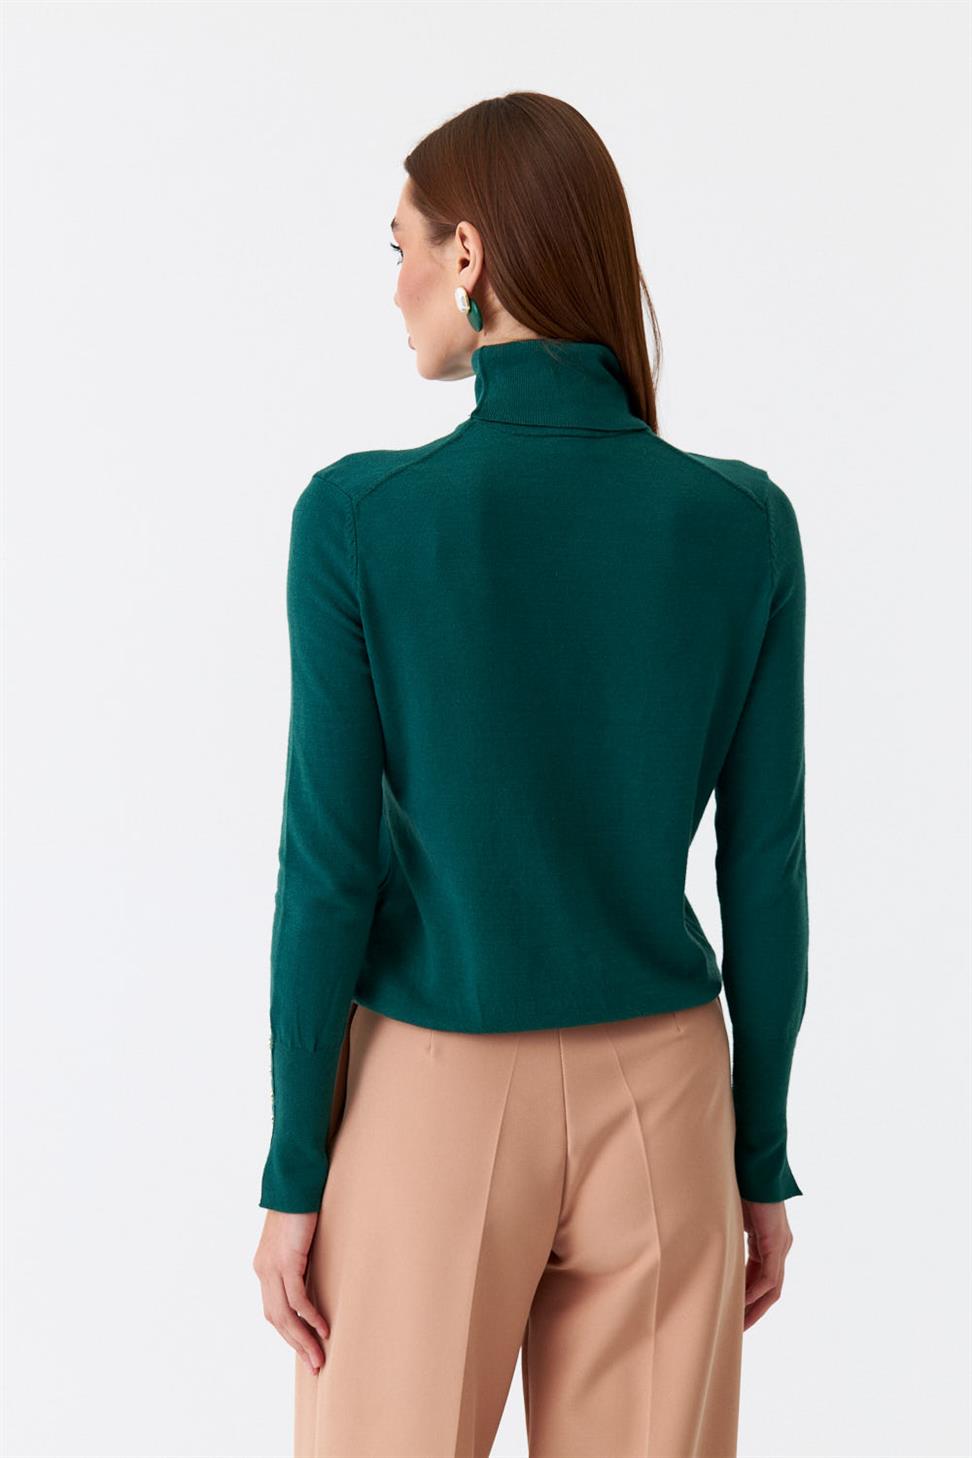 Green Sweater - Turtleneck Neck Cuff Sleeves Sweater - Emerald